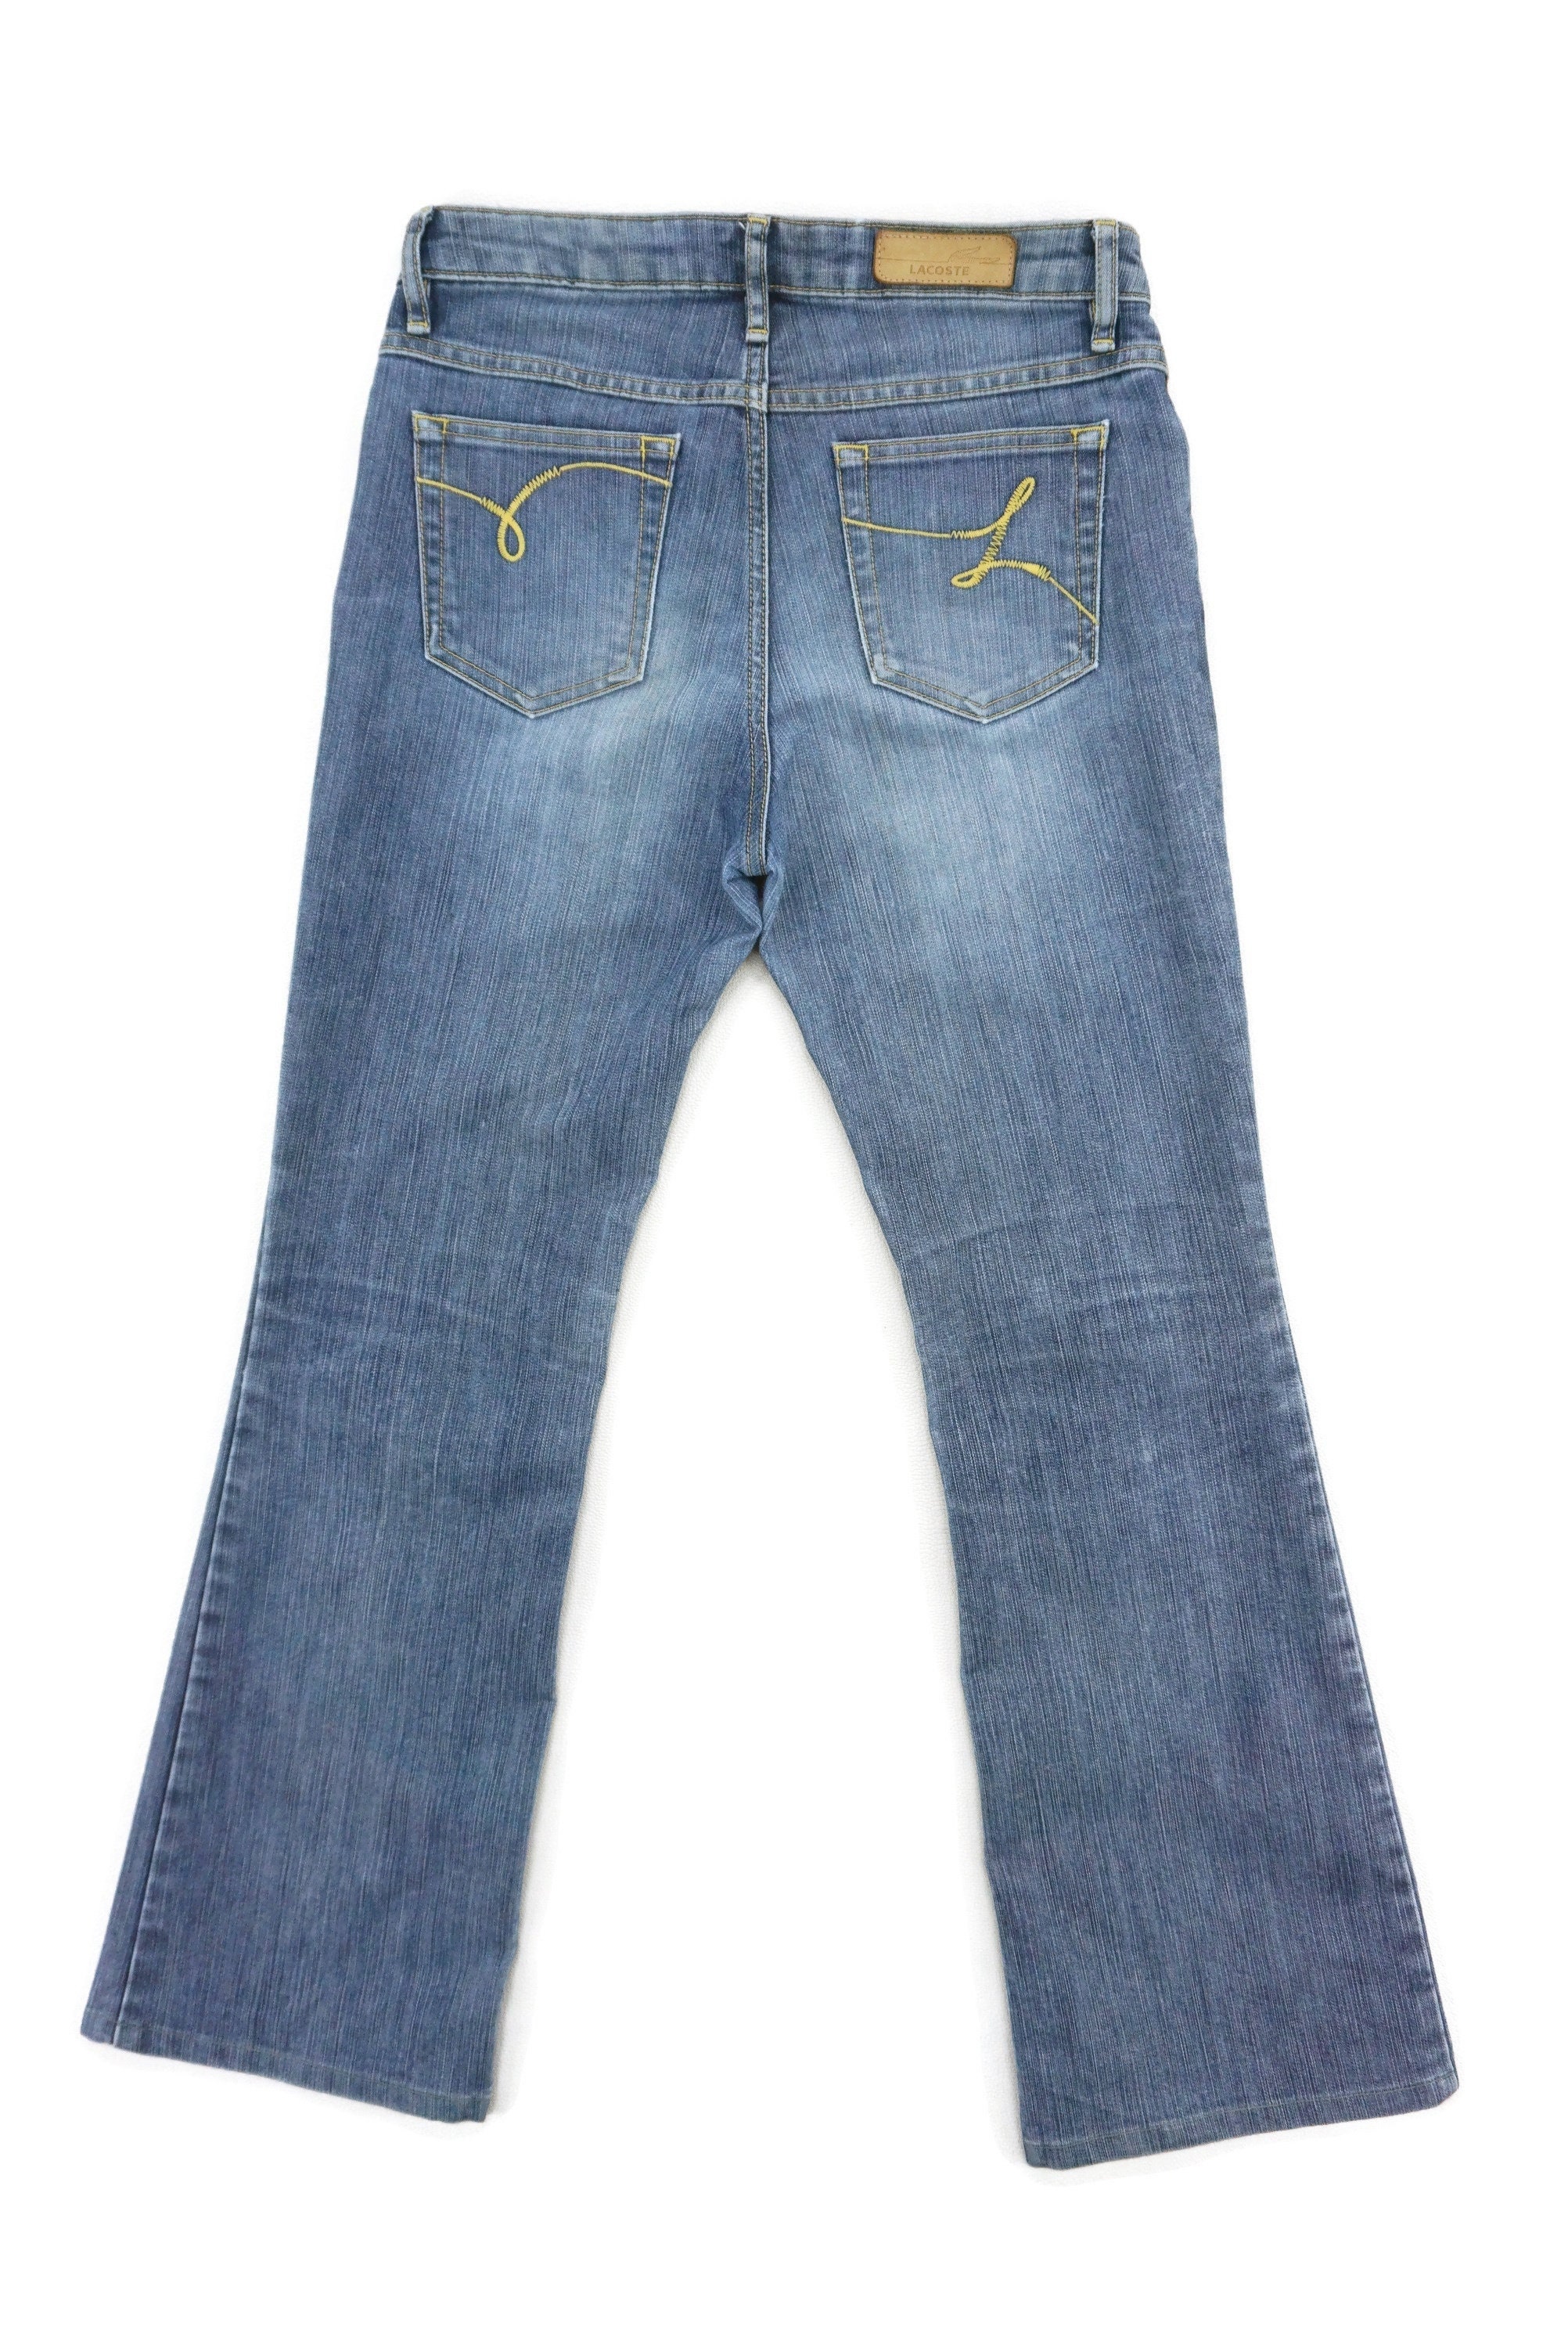 Lacoste Jeans Size 40 W28xl27.5 Lacoste Bootcut Denim Jeans Lacoste Flare Jeans Japan Made - Etsy